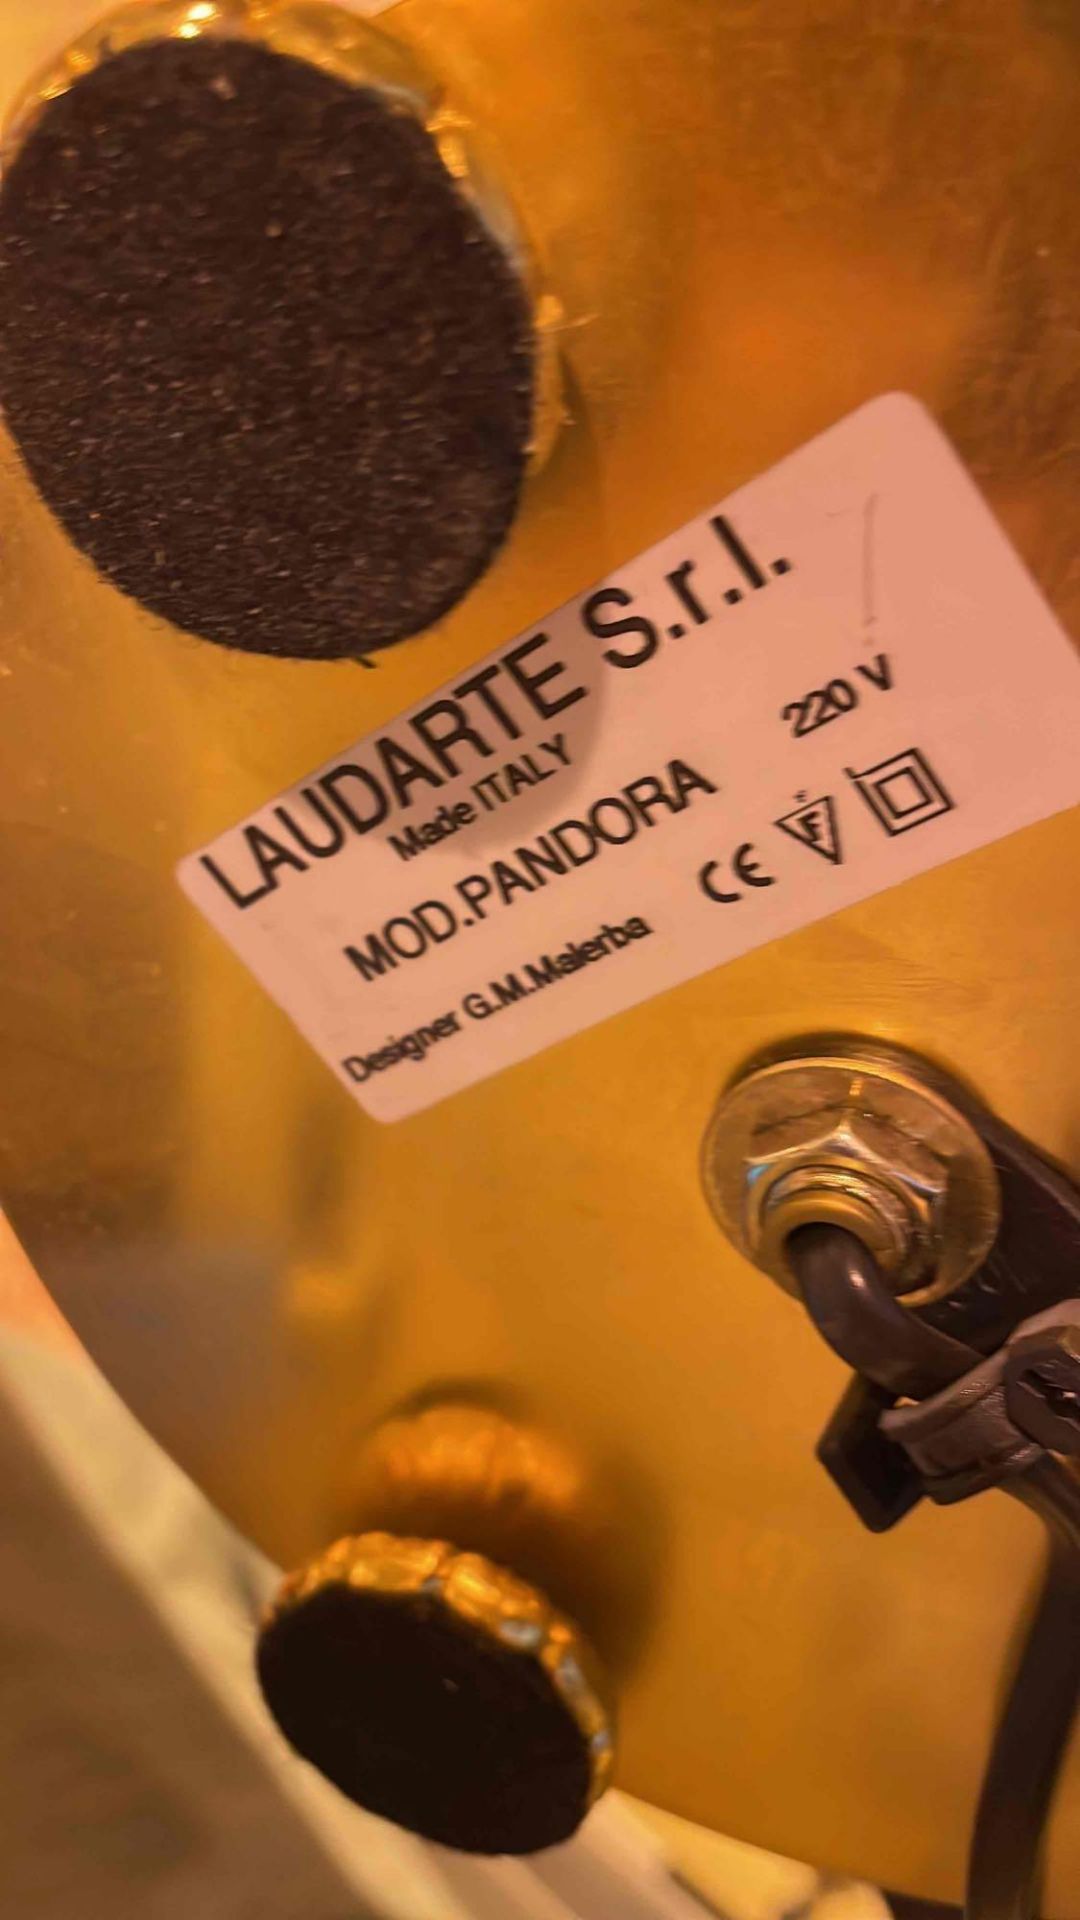 Laudarte S.R.L Mod. Pandora Gold And Burgundy Table Lamp 76cm Giovanni Maria Malerba Di Busca - - Bild 5 aus 5